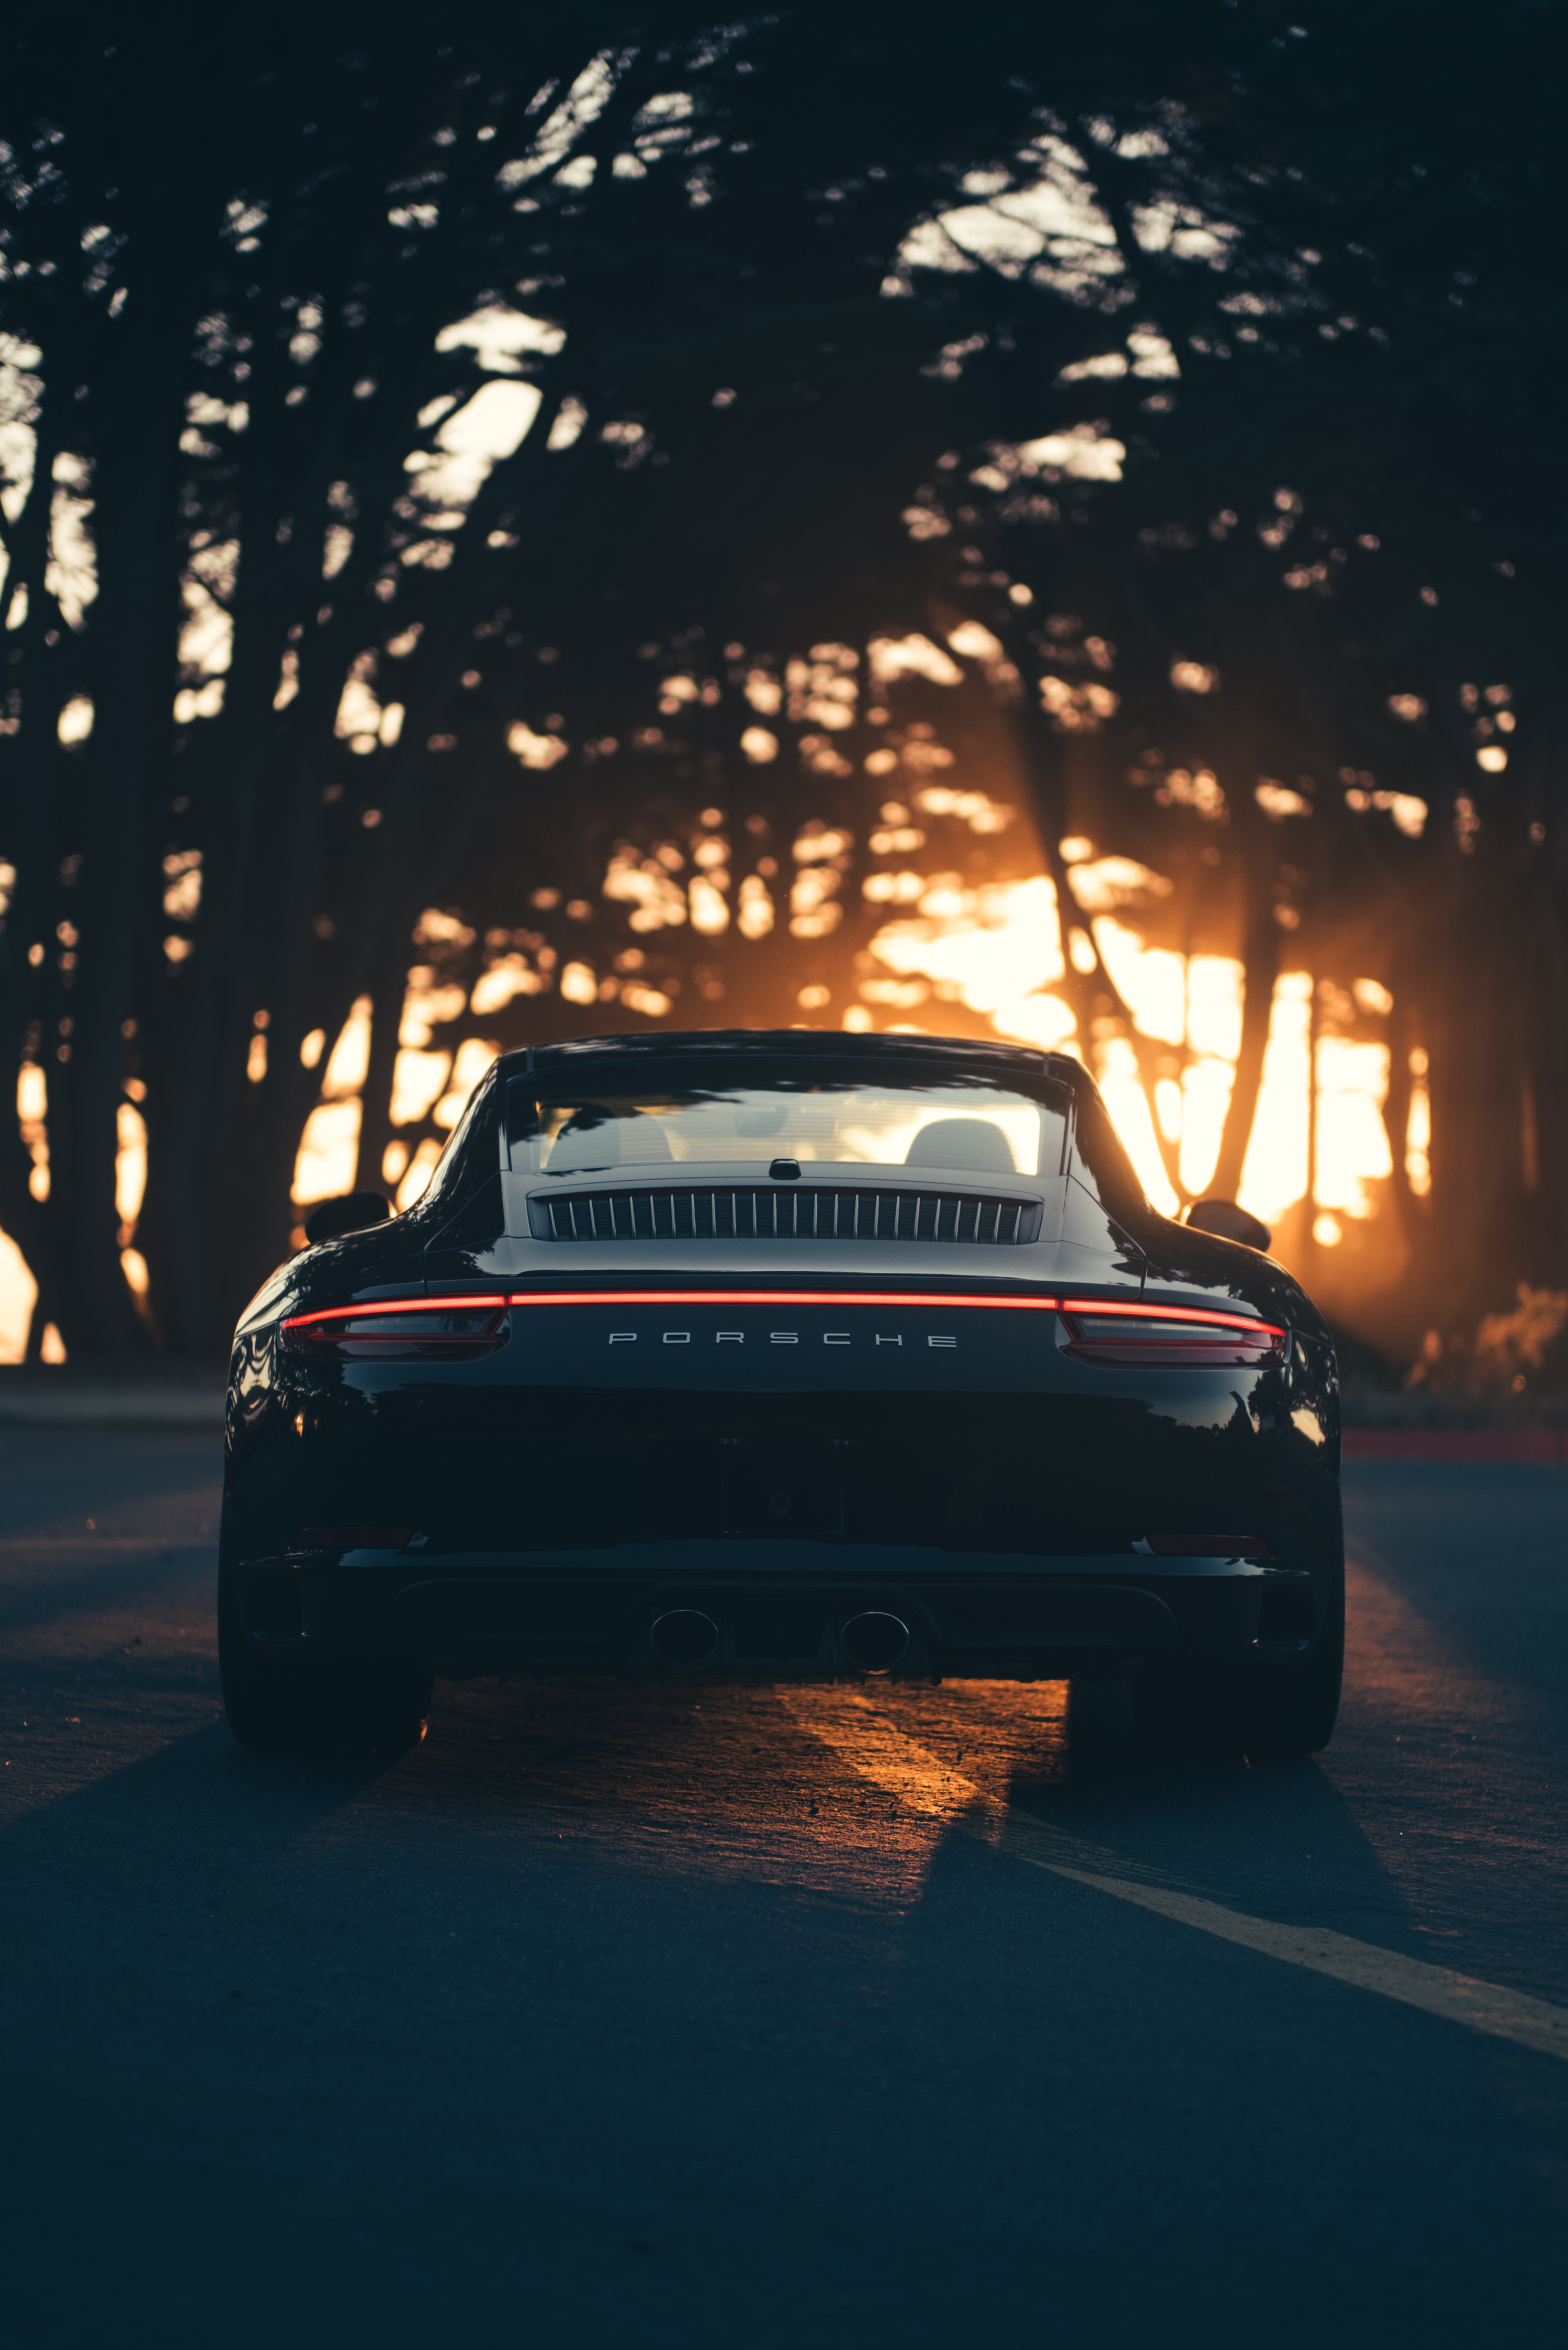 Best Porsche Background for mobile